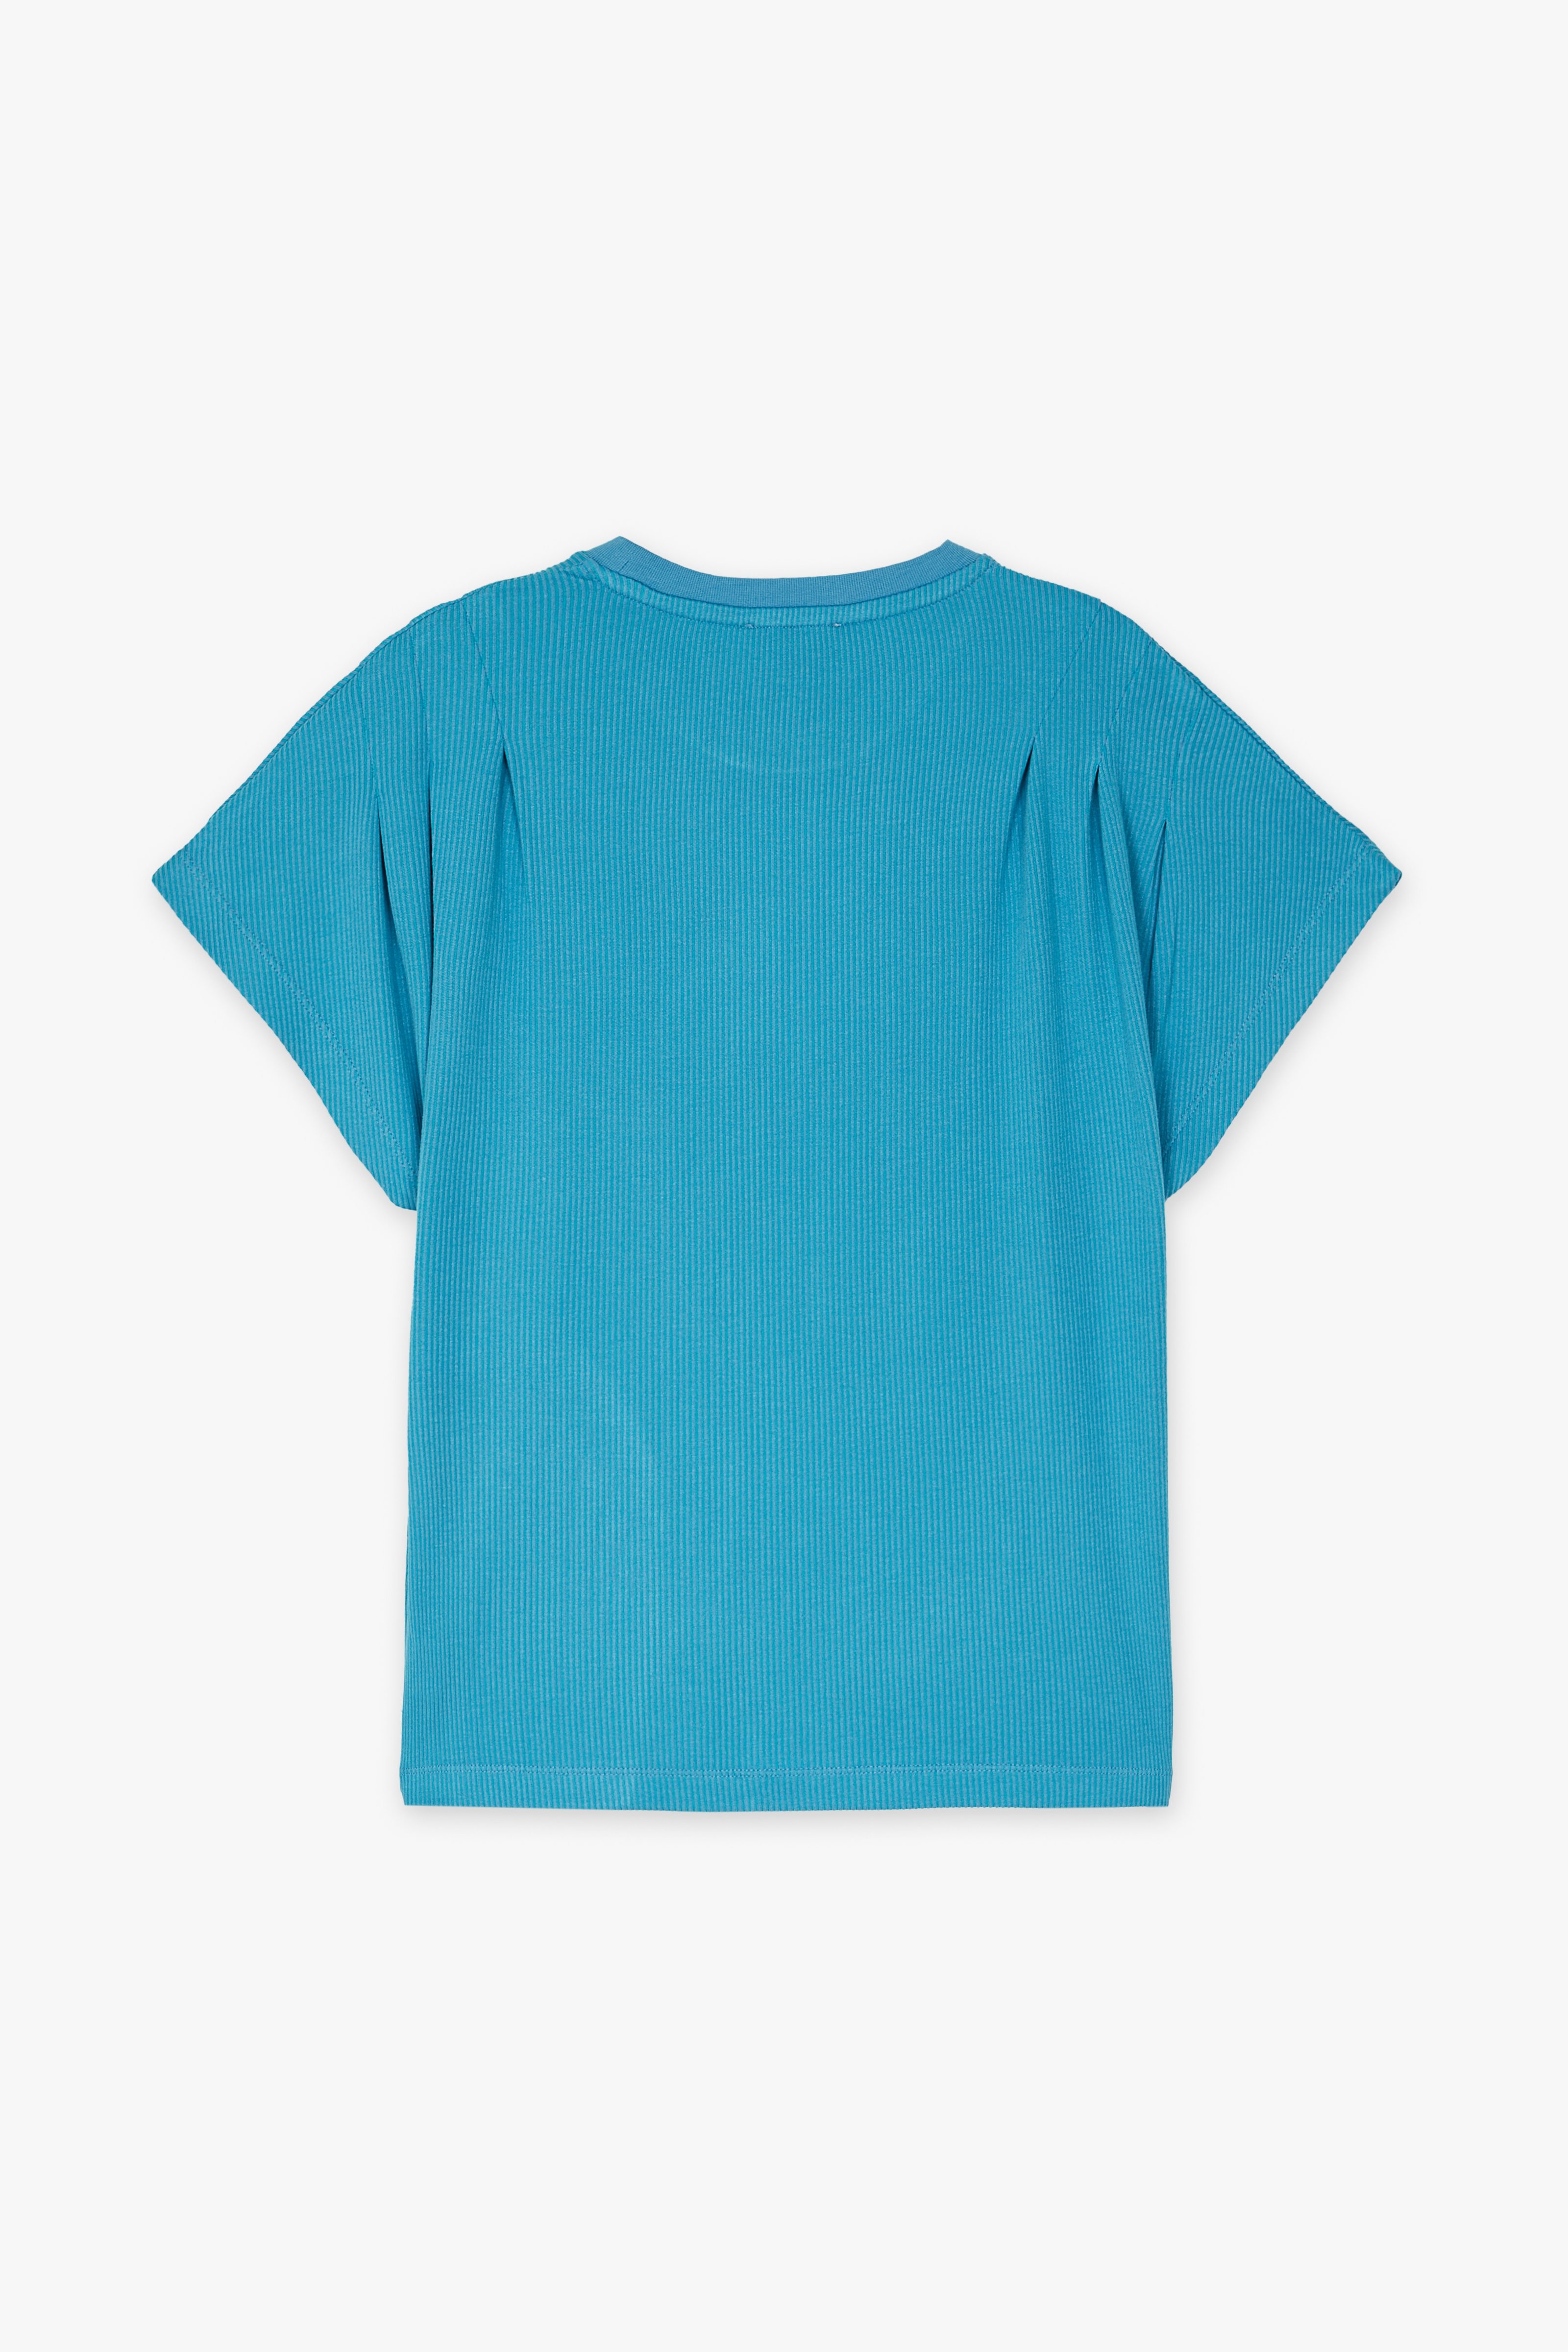 CKS Dames - JAZZY - t-shirt korte mouwen - intens blauw